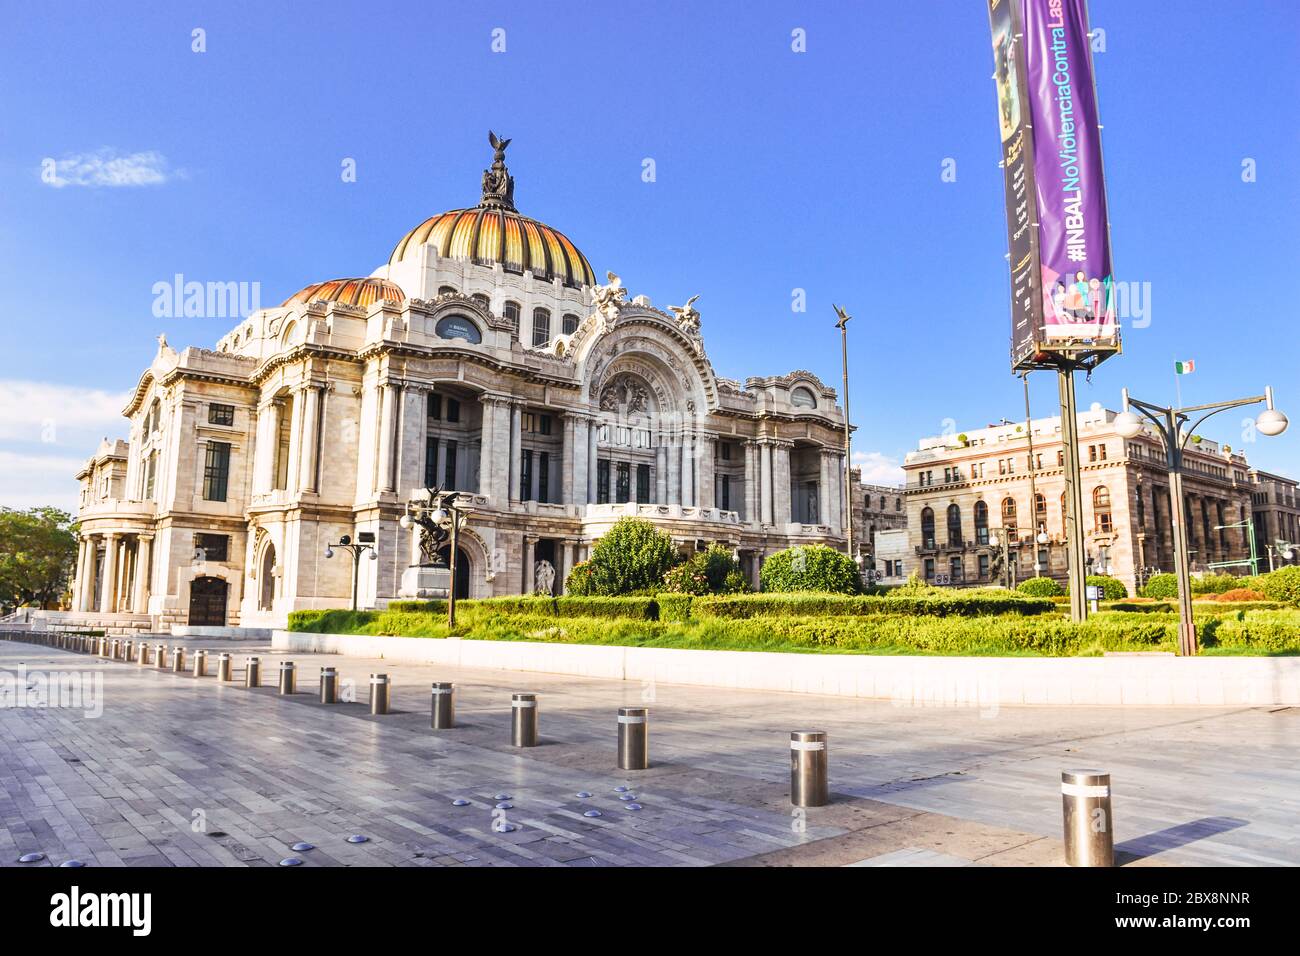 Mexico City, Mexico ; April 26 2020: view of the Palacio de Bellas Artes, a famous theater, museum and music venue in Mexico City Stock Photo